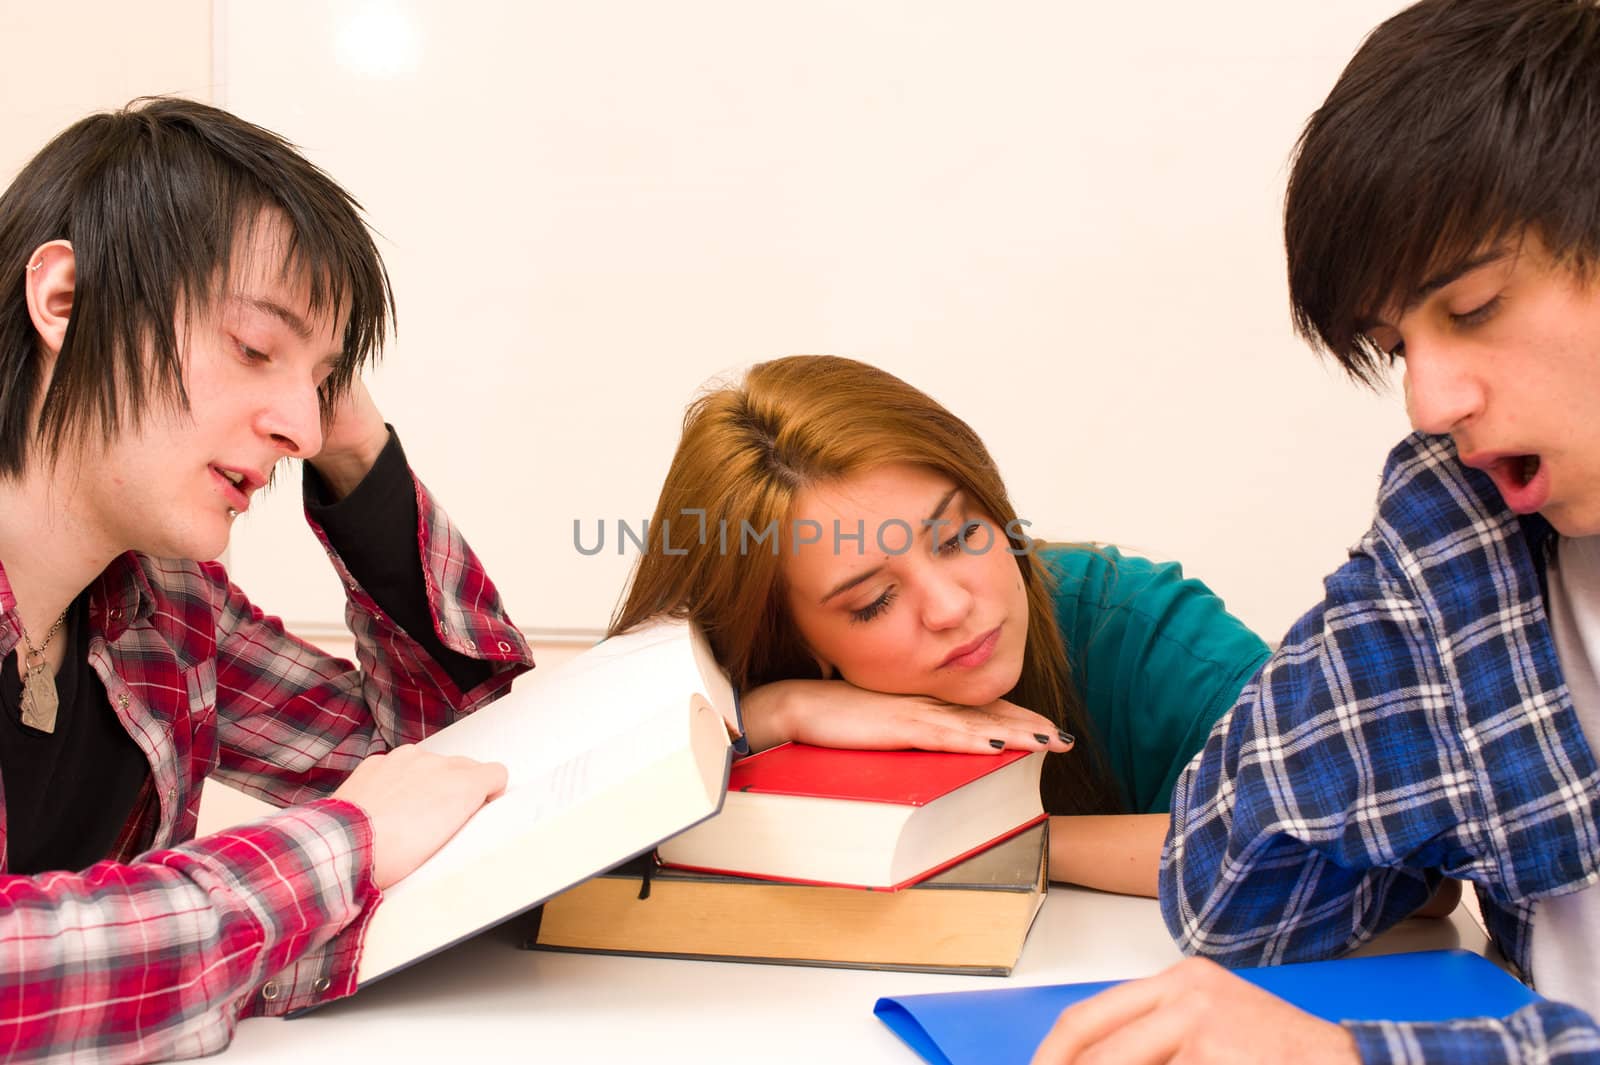 Unmotivated students sitting around their books